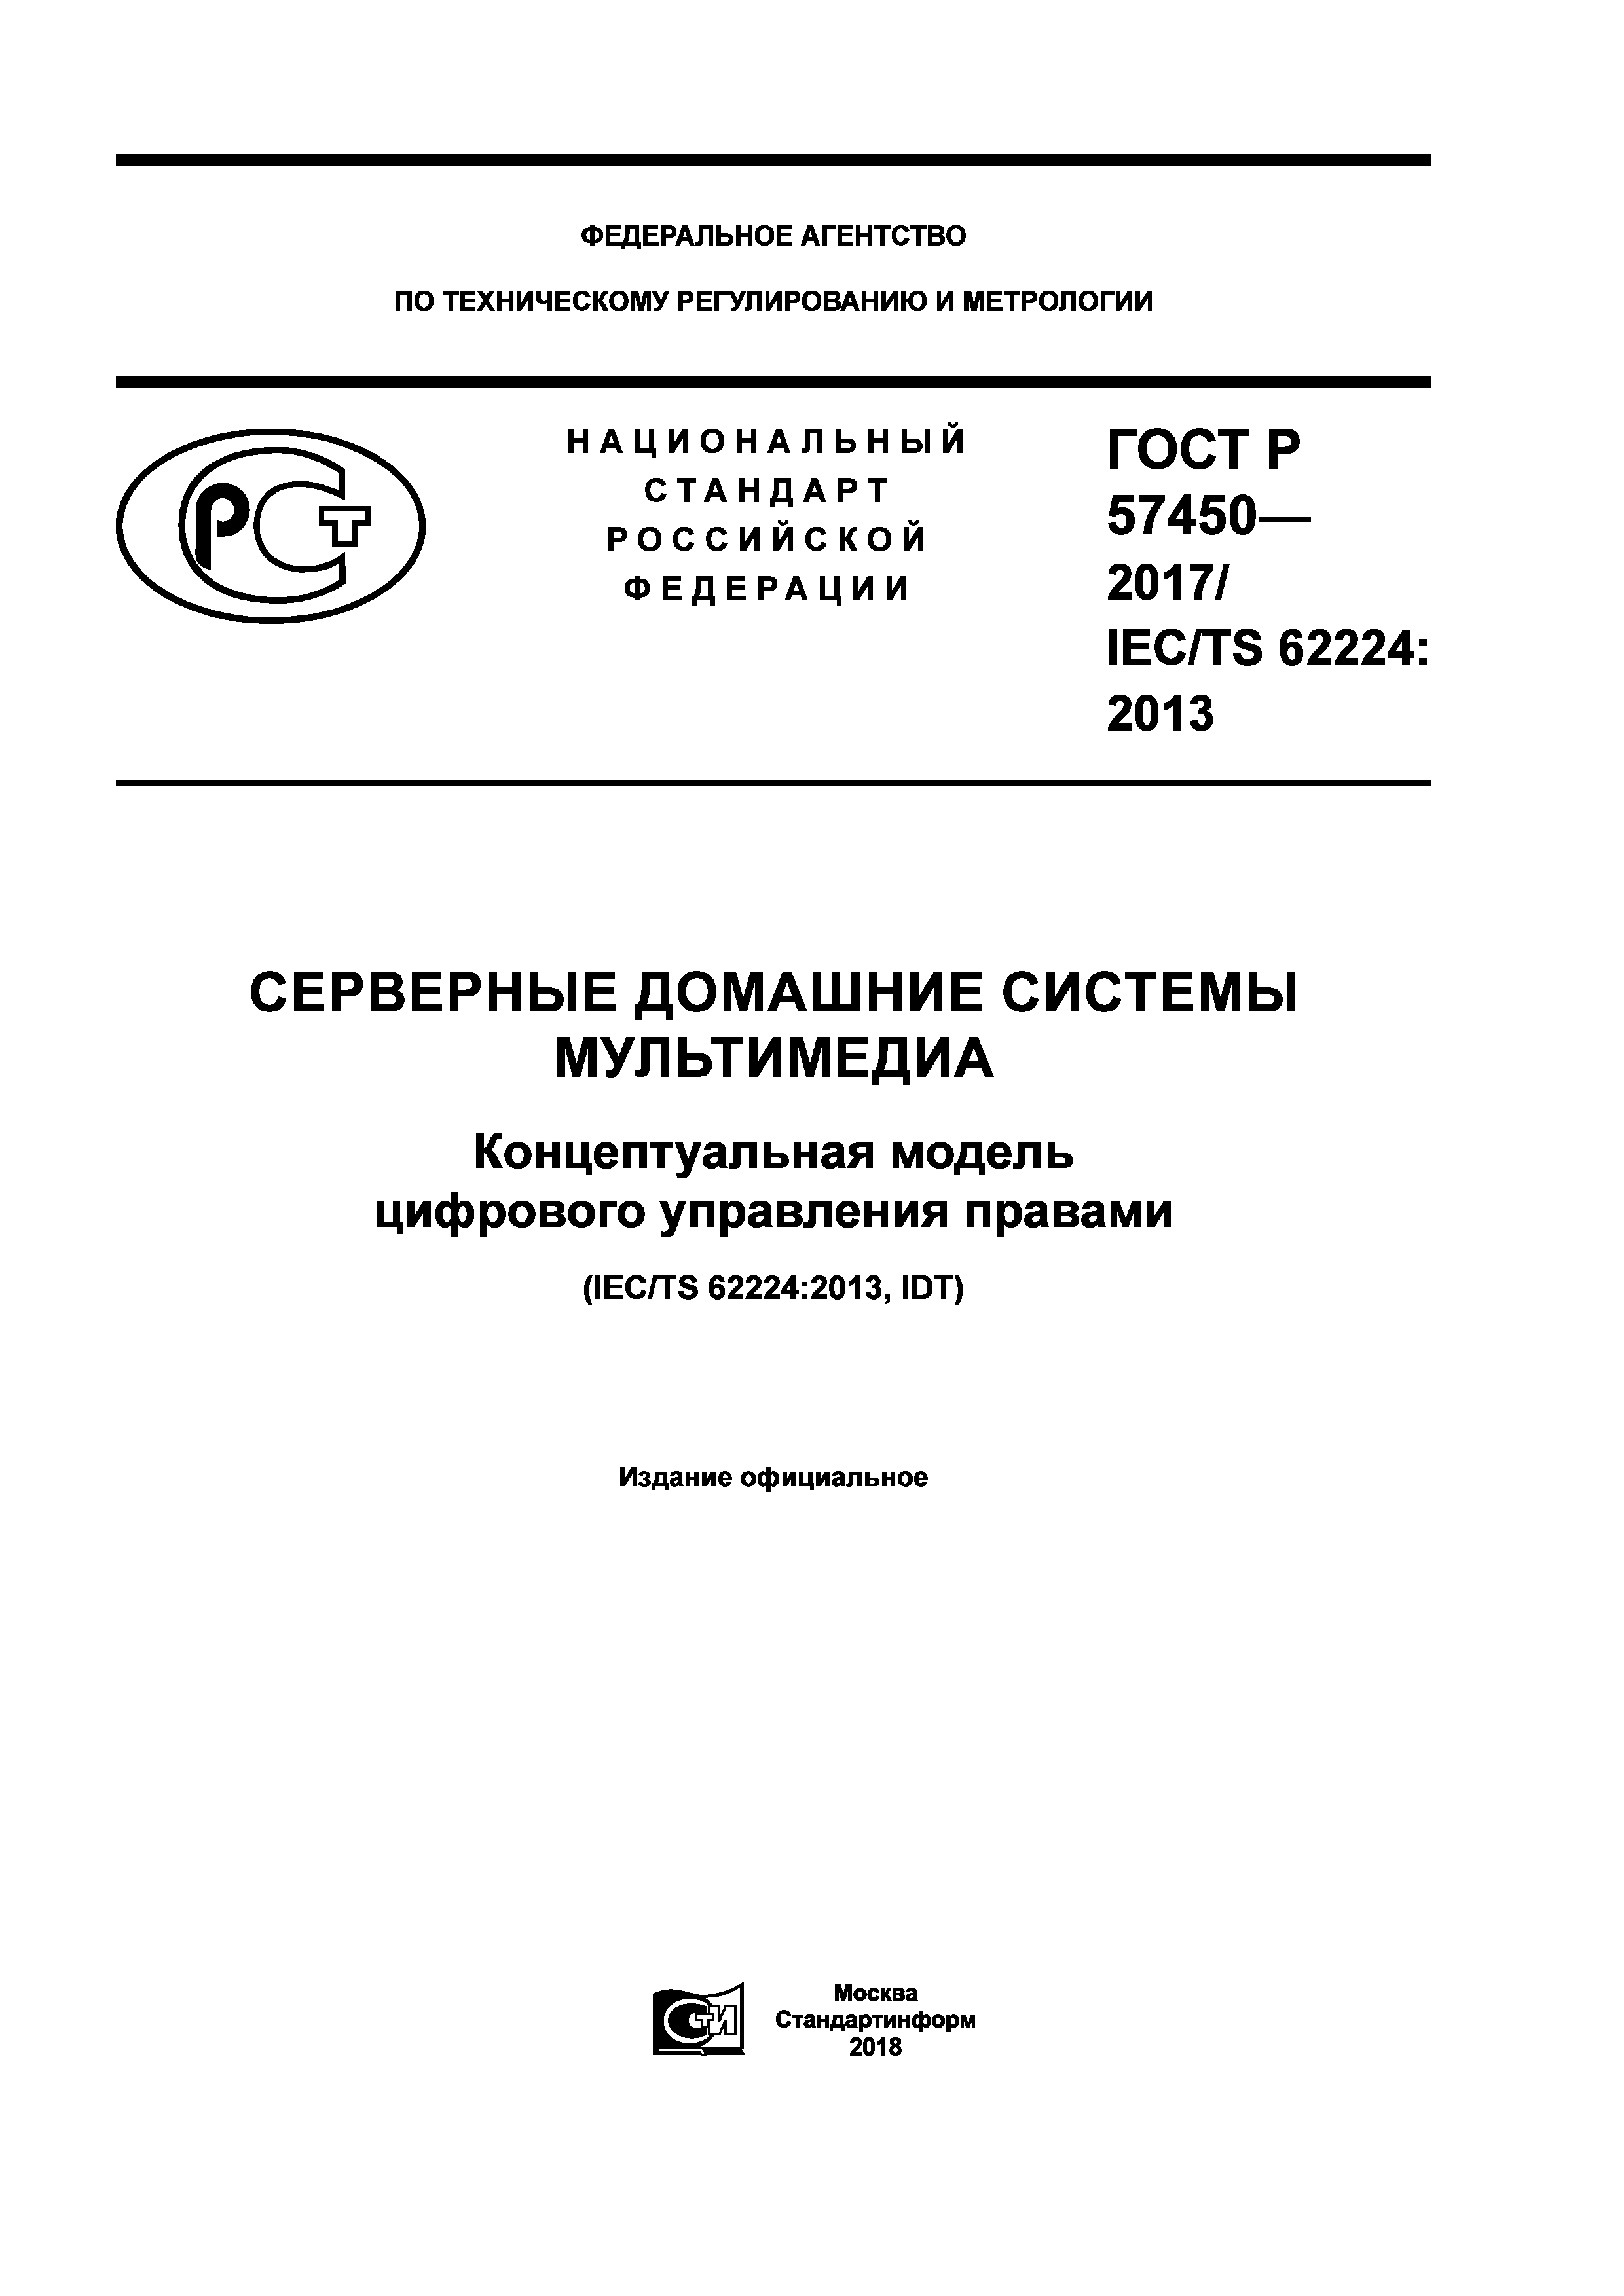 ГОСТ Р 57450-2017